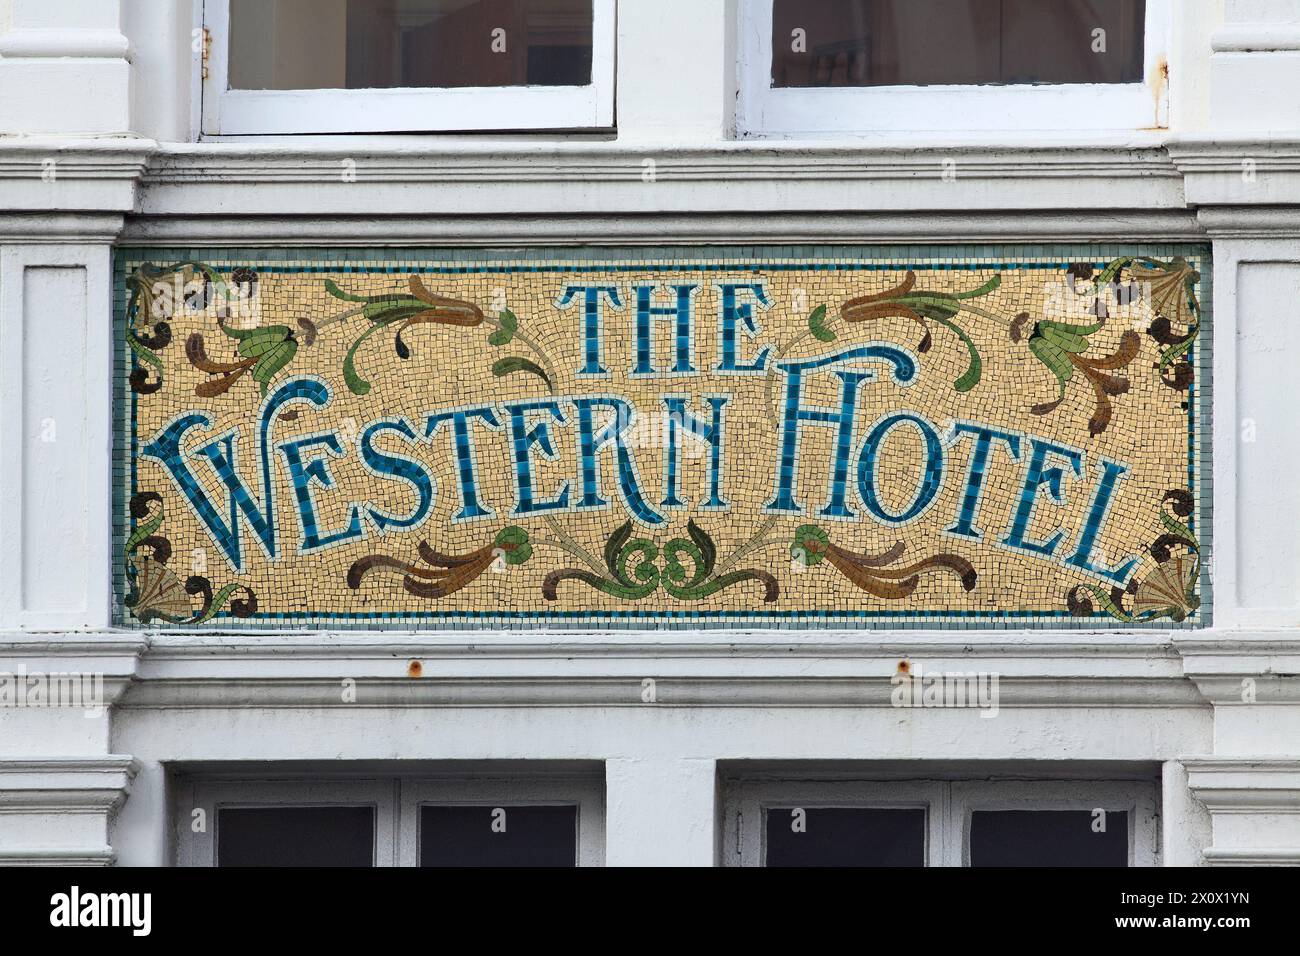 Mosaikschild auf dem ehemaligen Western Hotel, heute Paris House Pub (Le Pub), Western Road, Hove. Stockfoto